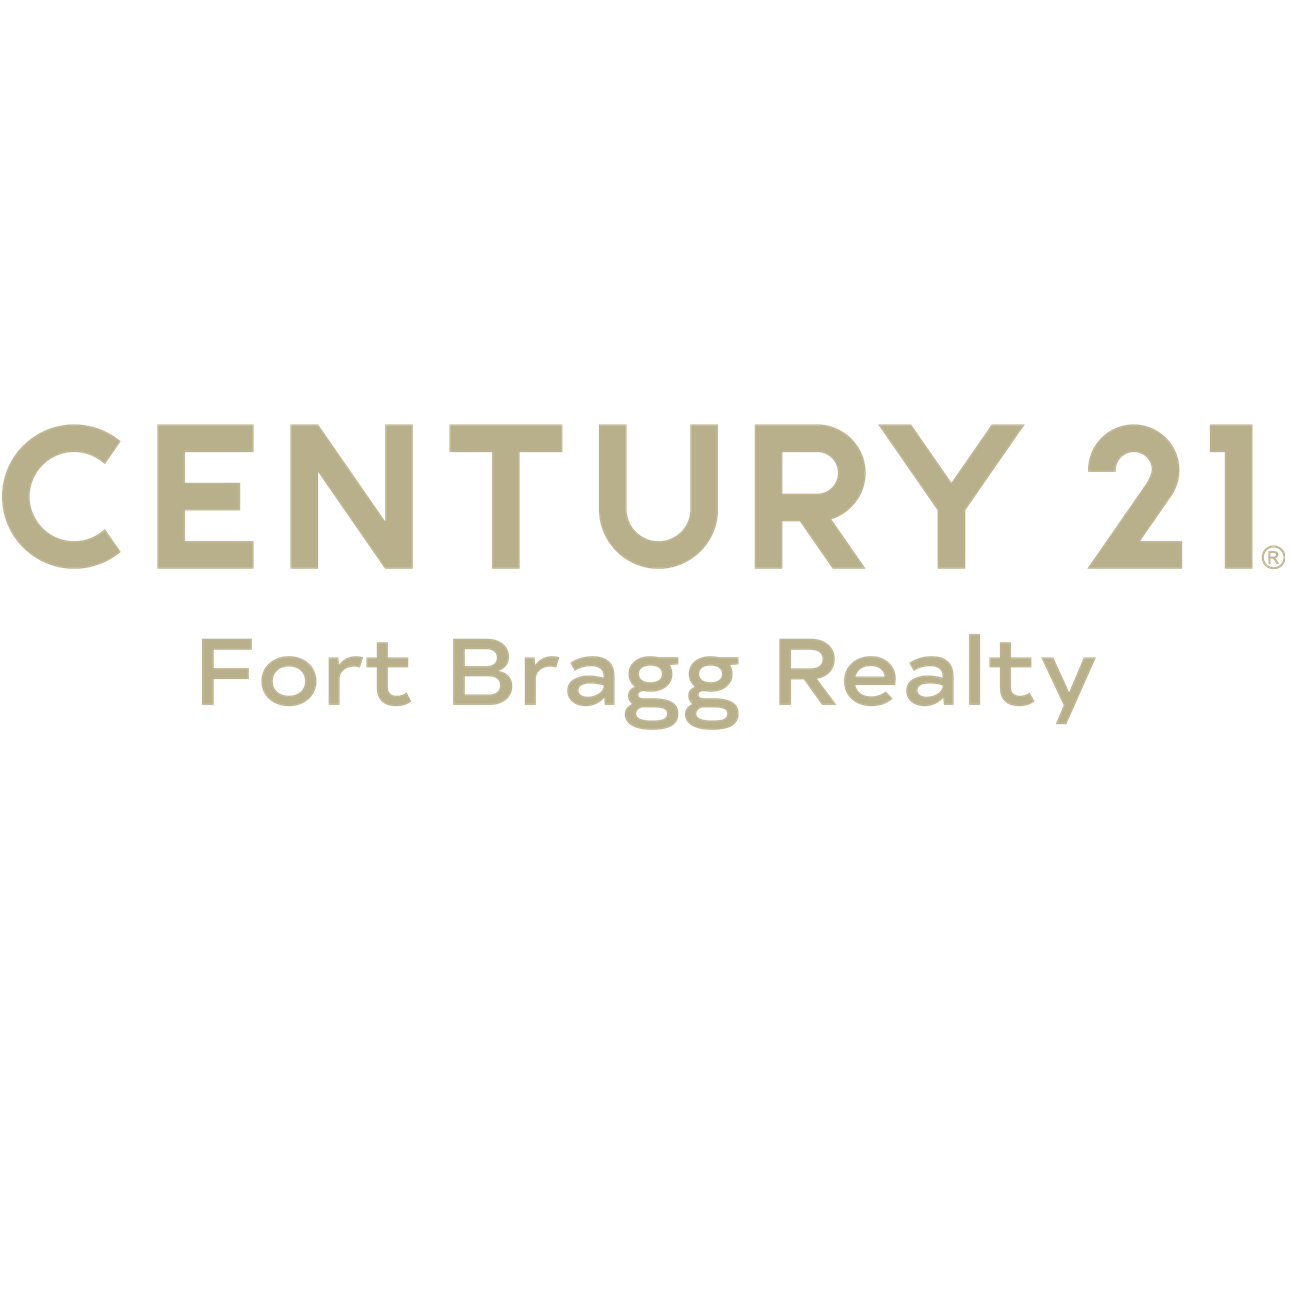 Stephanie Berry - CENTURY 21 Fort Bragg Realty - Fort Bragg, CA 95437 - (707)367-2877 | ShowMeLocal.com